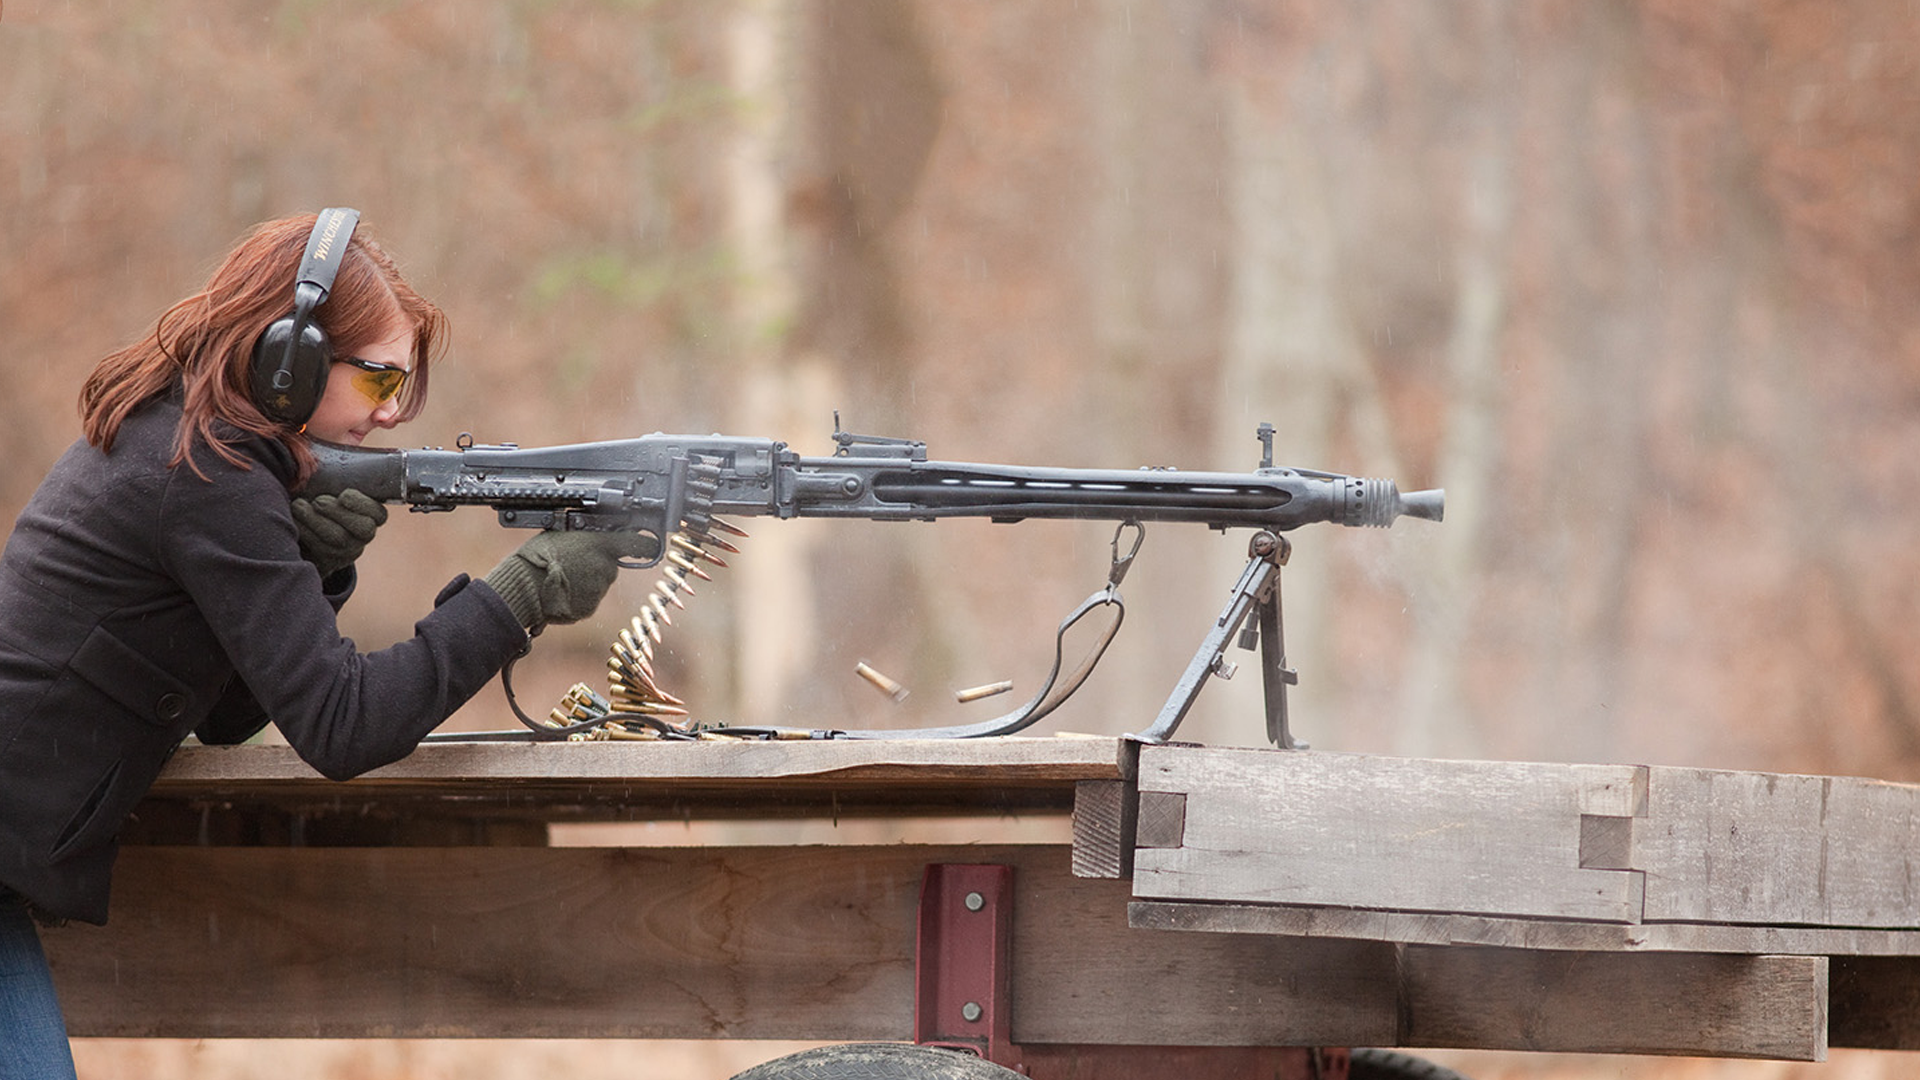 People 1920x1080 women redhead MG42 machine gun 7.62x51 girls with guns aiming headphones ammunition